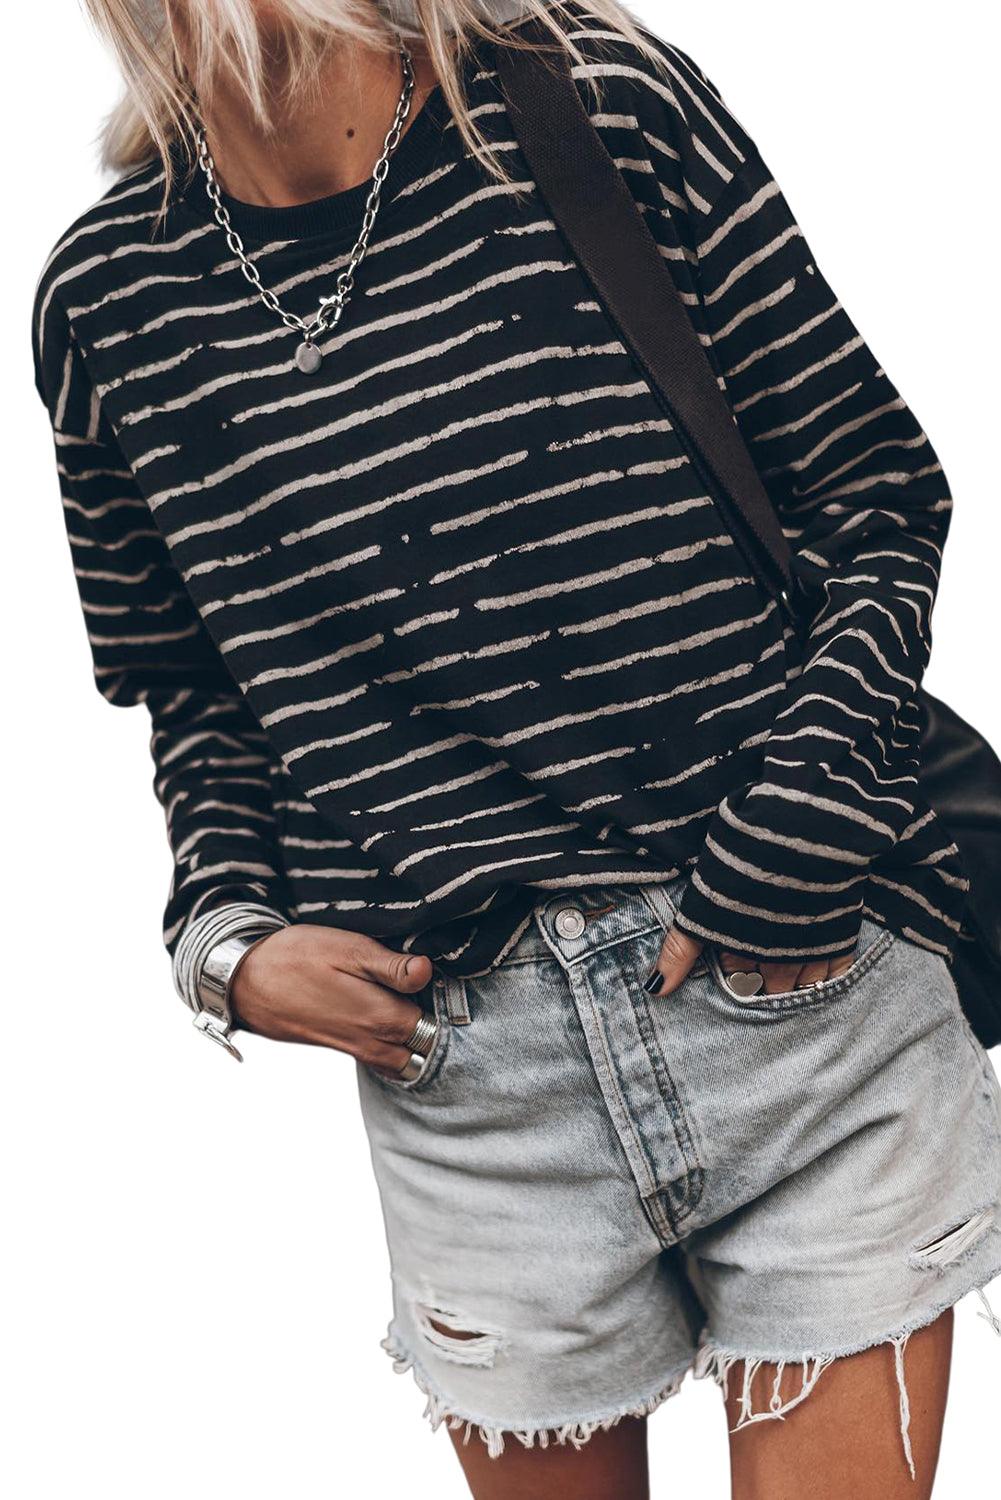 Black Retro Striped Casual Long Sleeve Top - L & M Kee, LLC